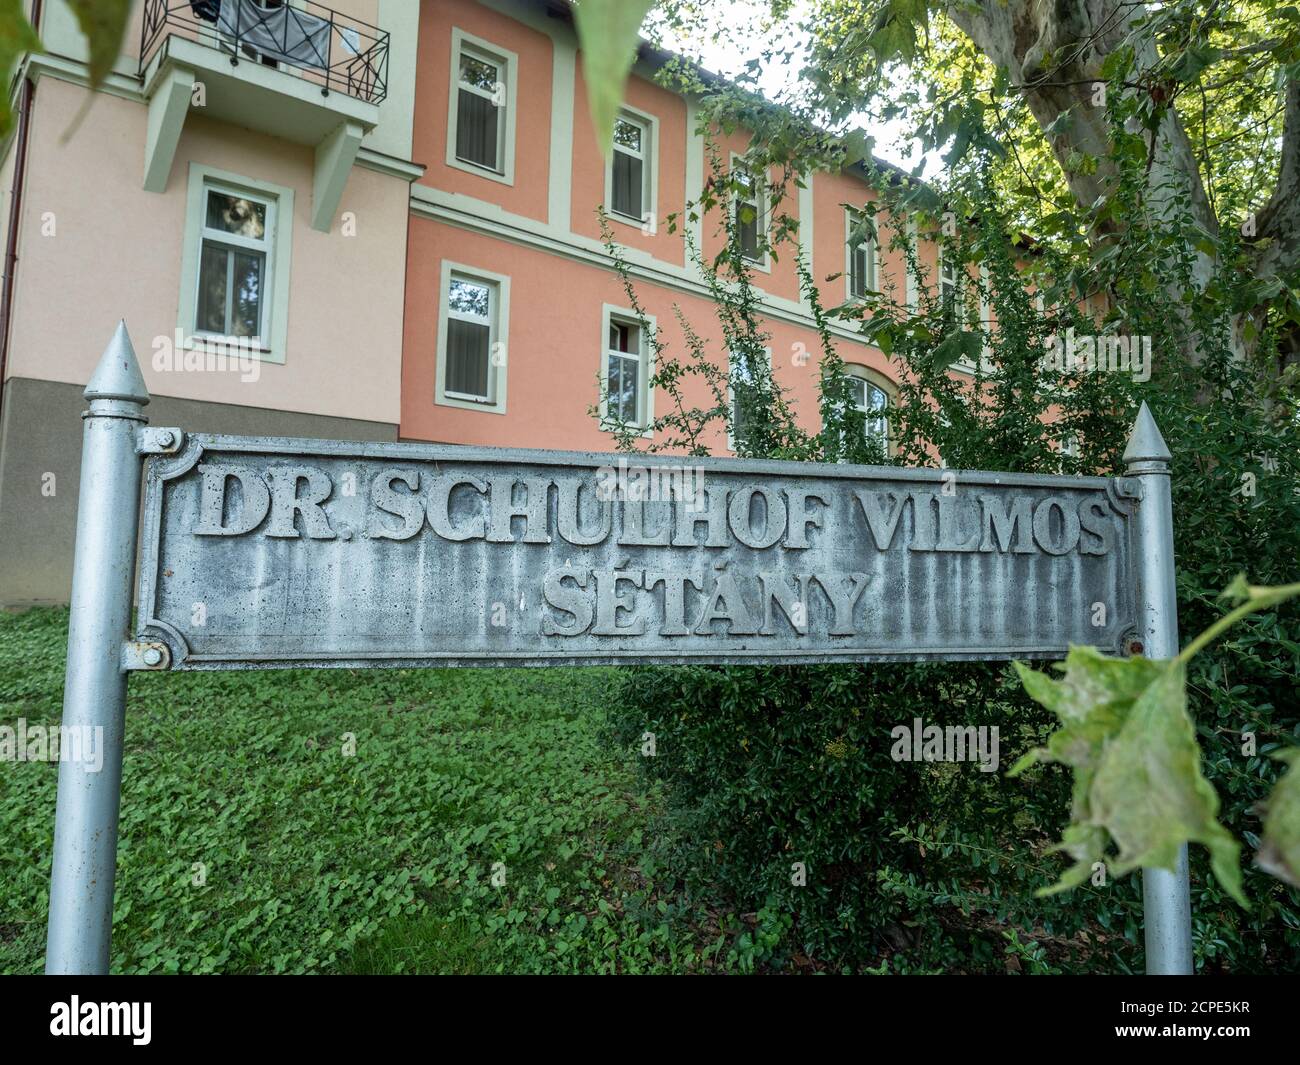 HEVIZ, UNGHERIA - 08/25/2020: Segno metallico della passeggiata Doctor Schulhof Vilmos a Heviz spa Foto Stock